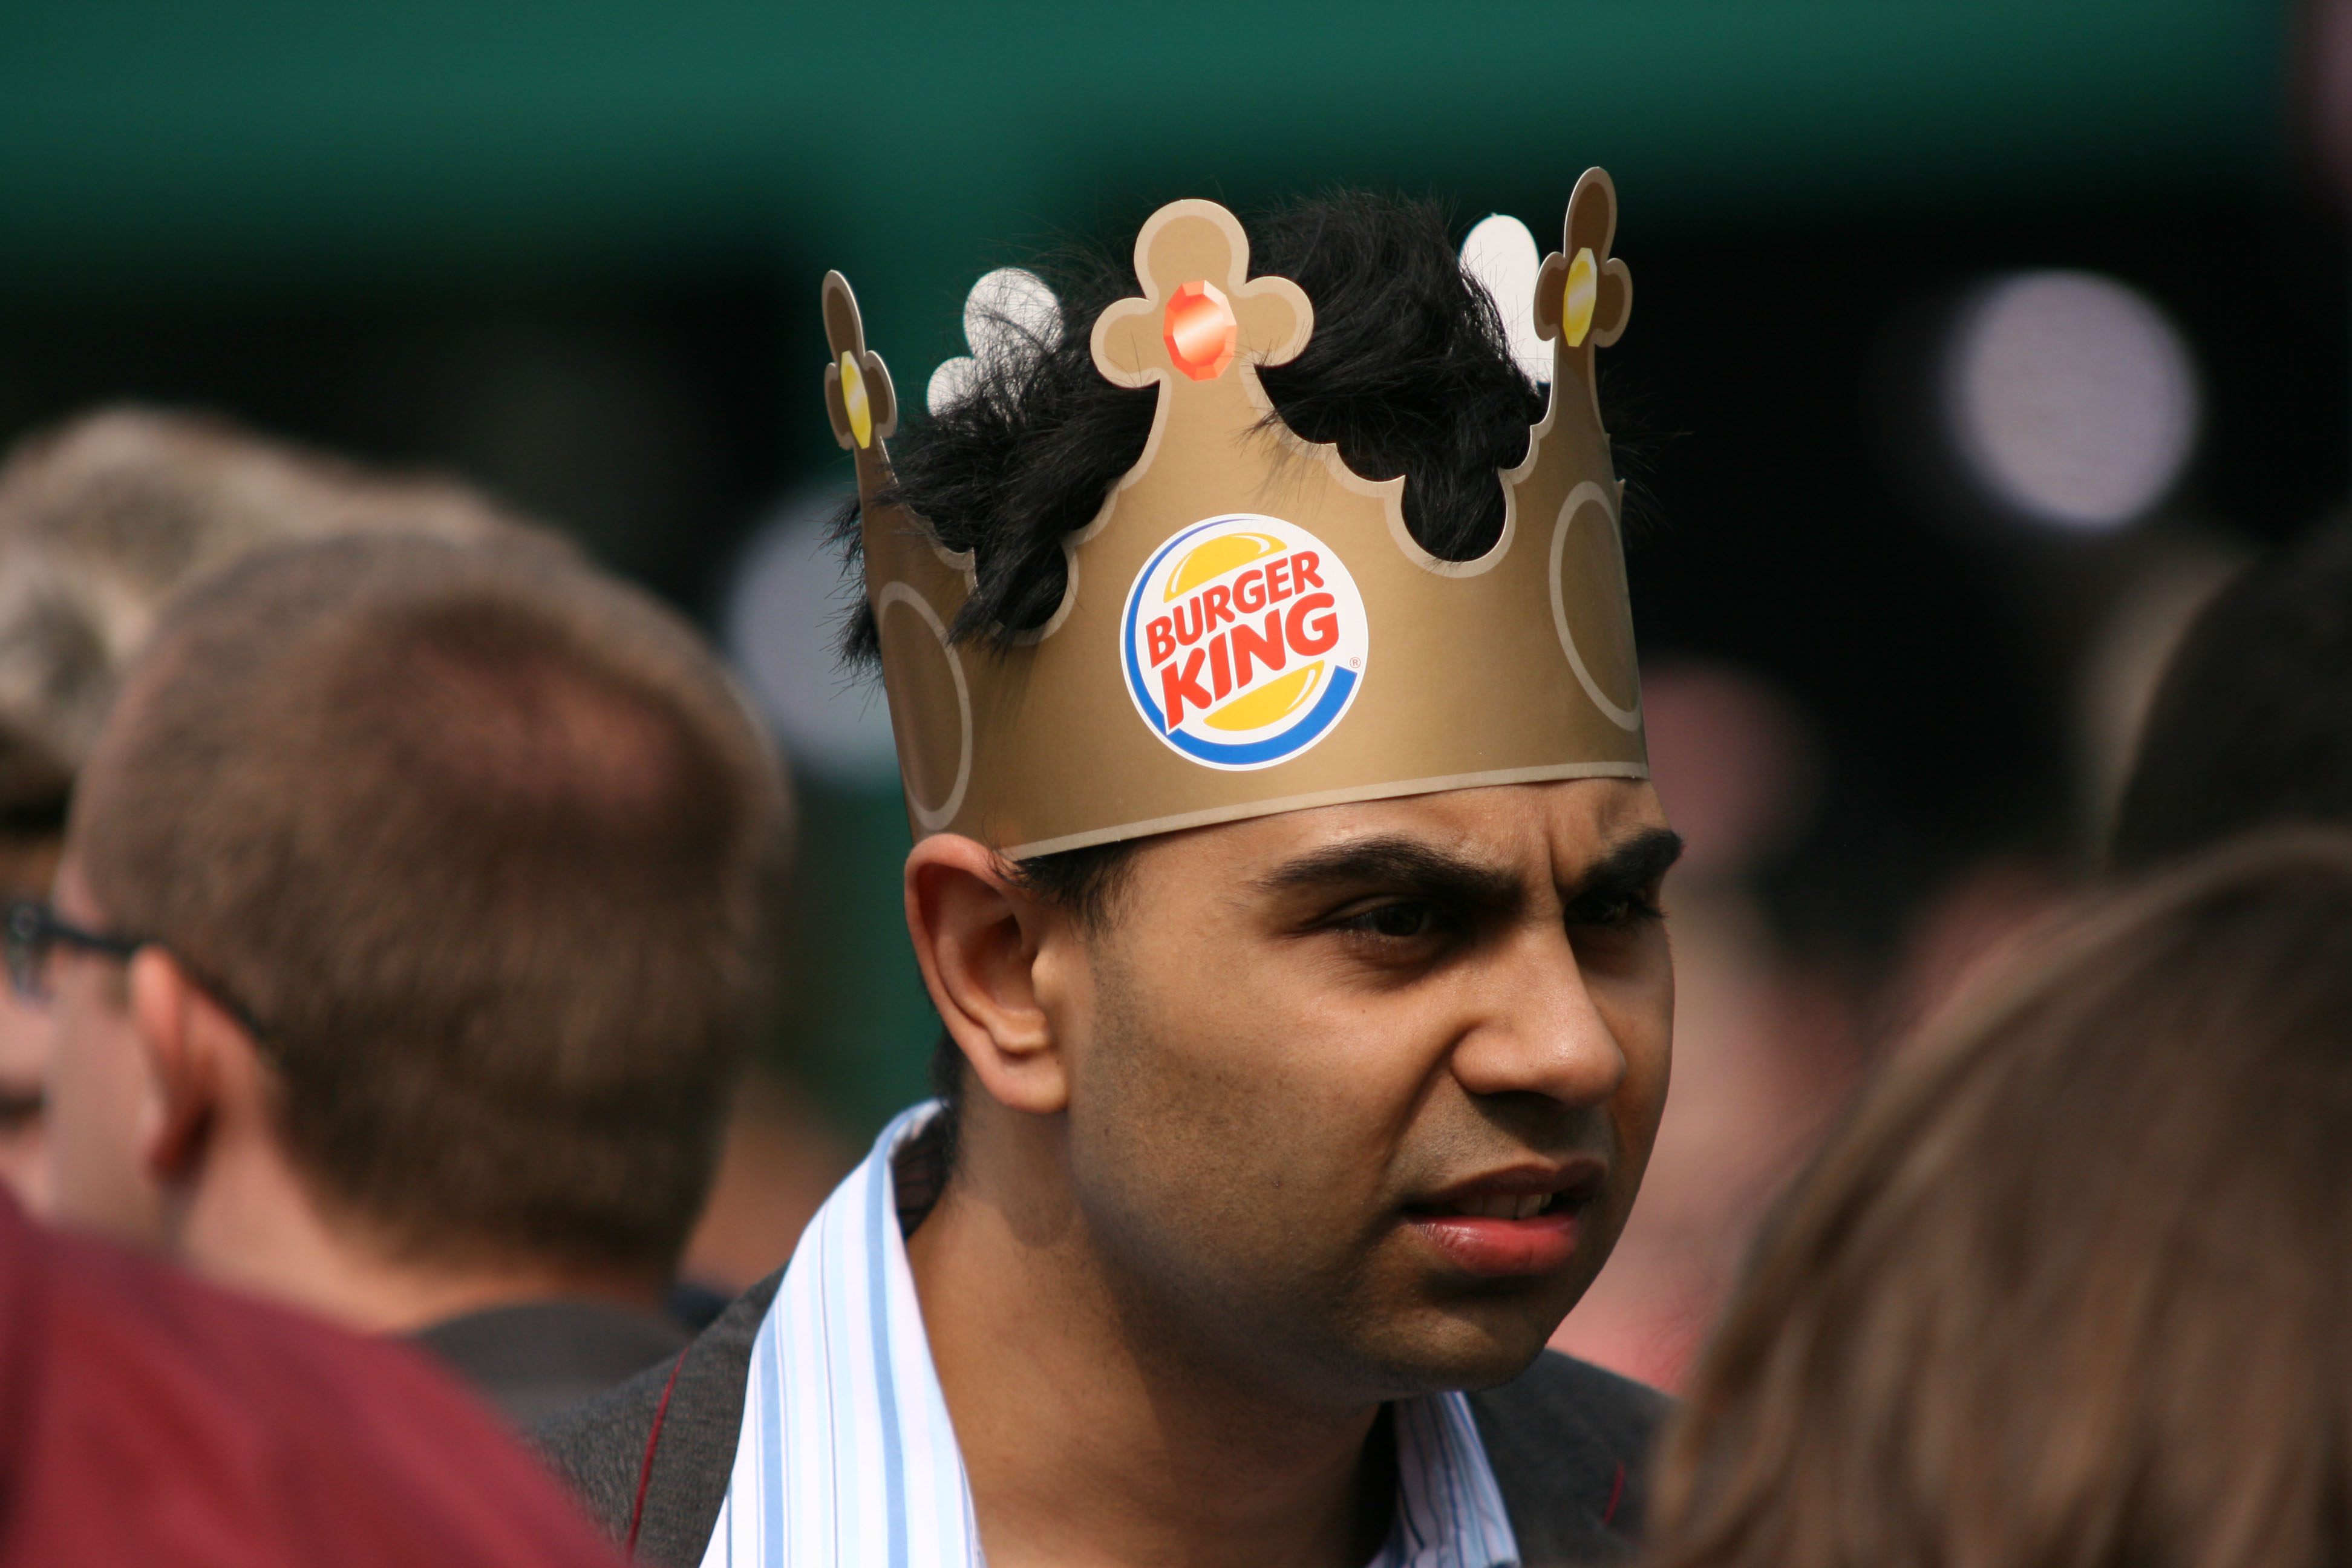 Burger King Menyajikan Data Sensitif, Tanpa Kecerdasan Data Blockchain Mayo Plato. Pencarian Vertikal. Ai.